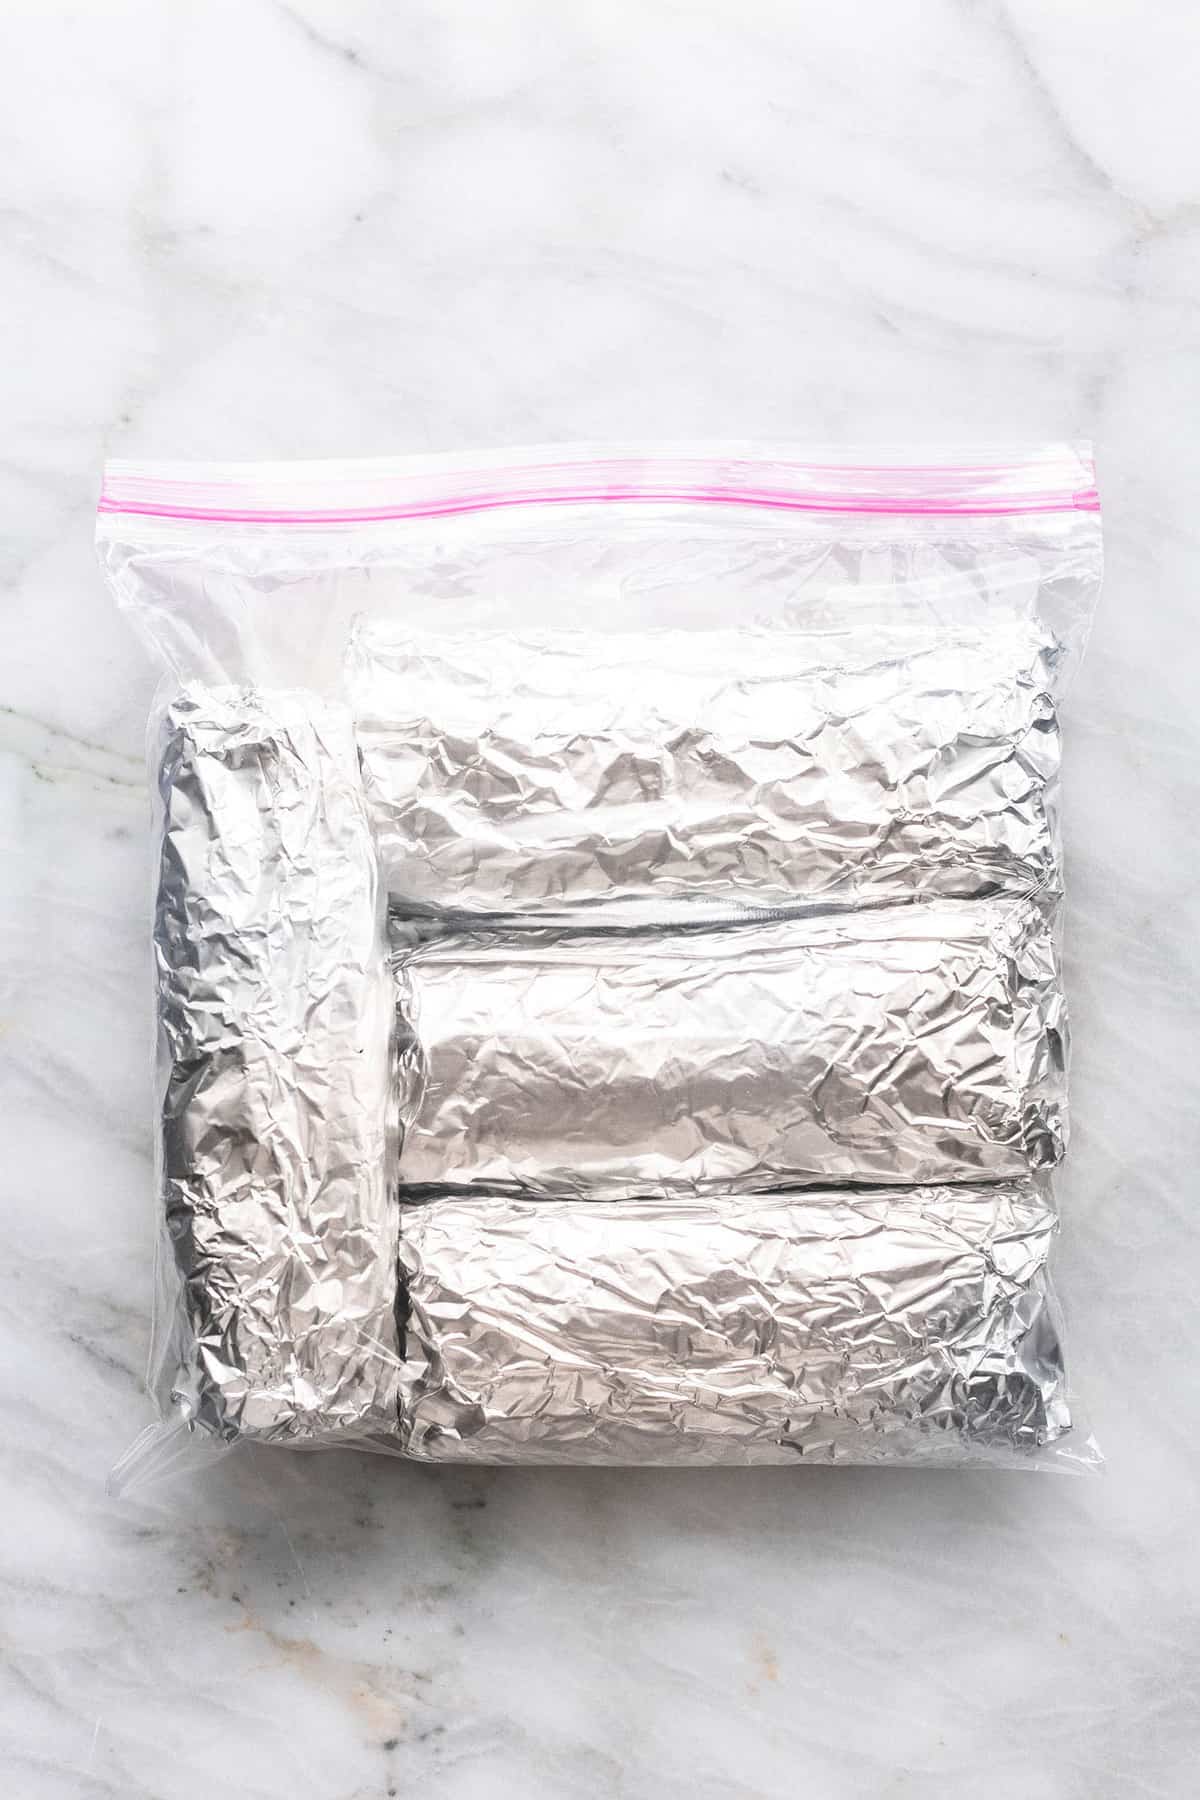 top view of freezer breakfast burritos wrapped in foil in a zip lock bag.